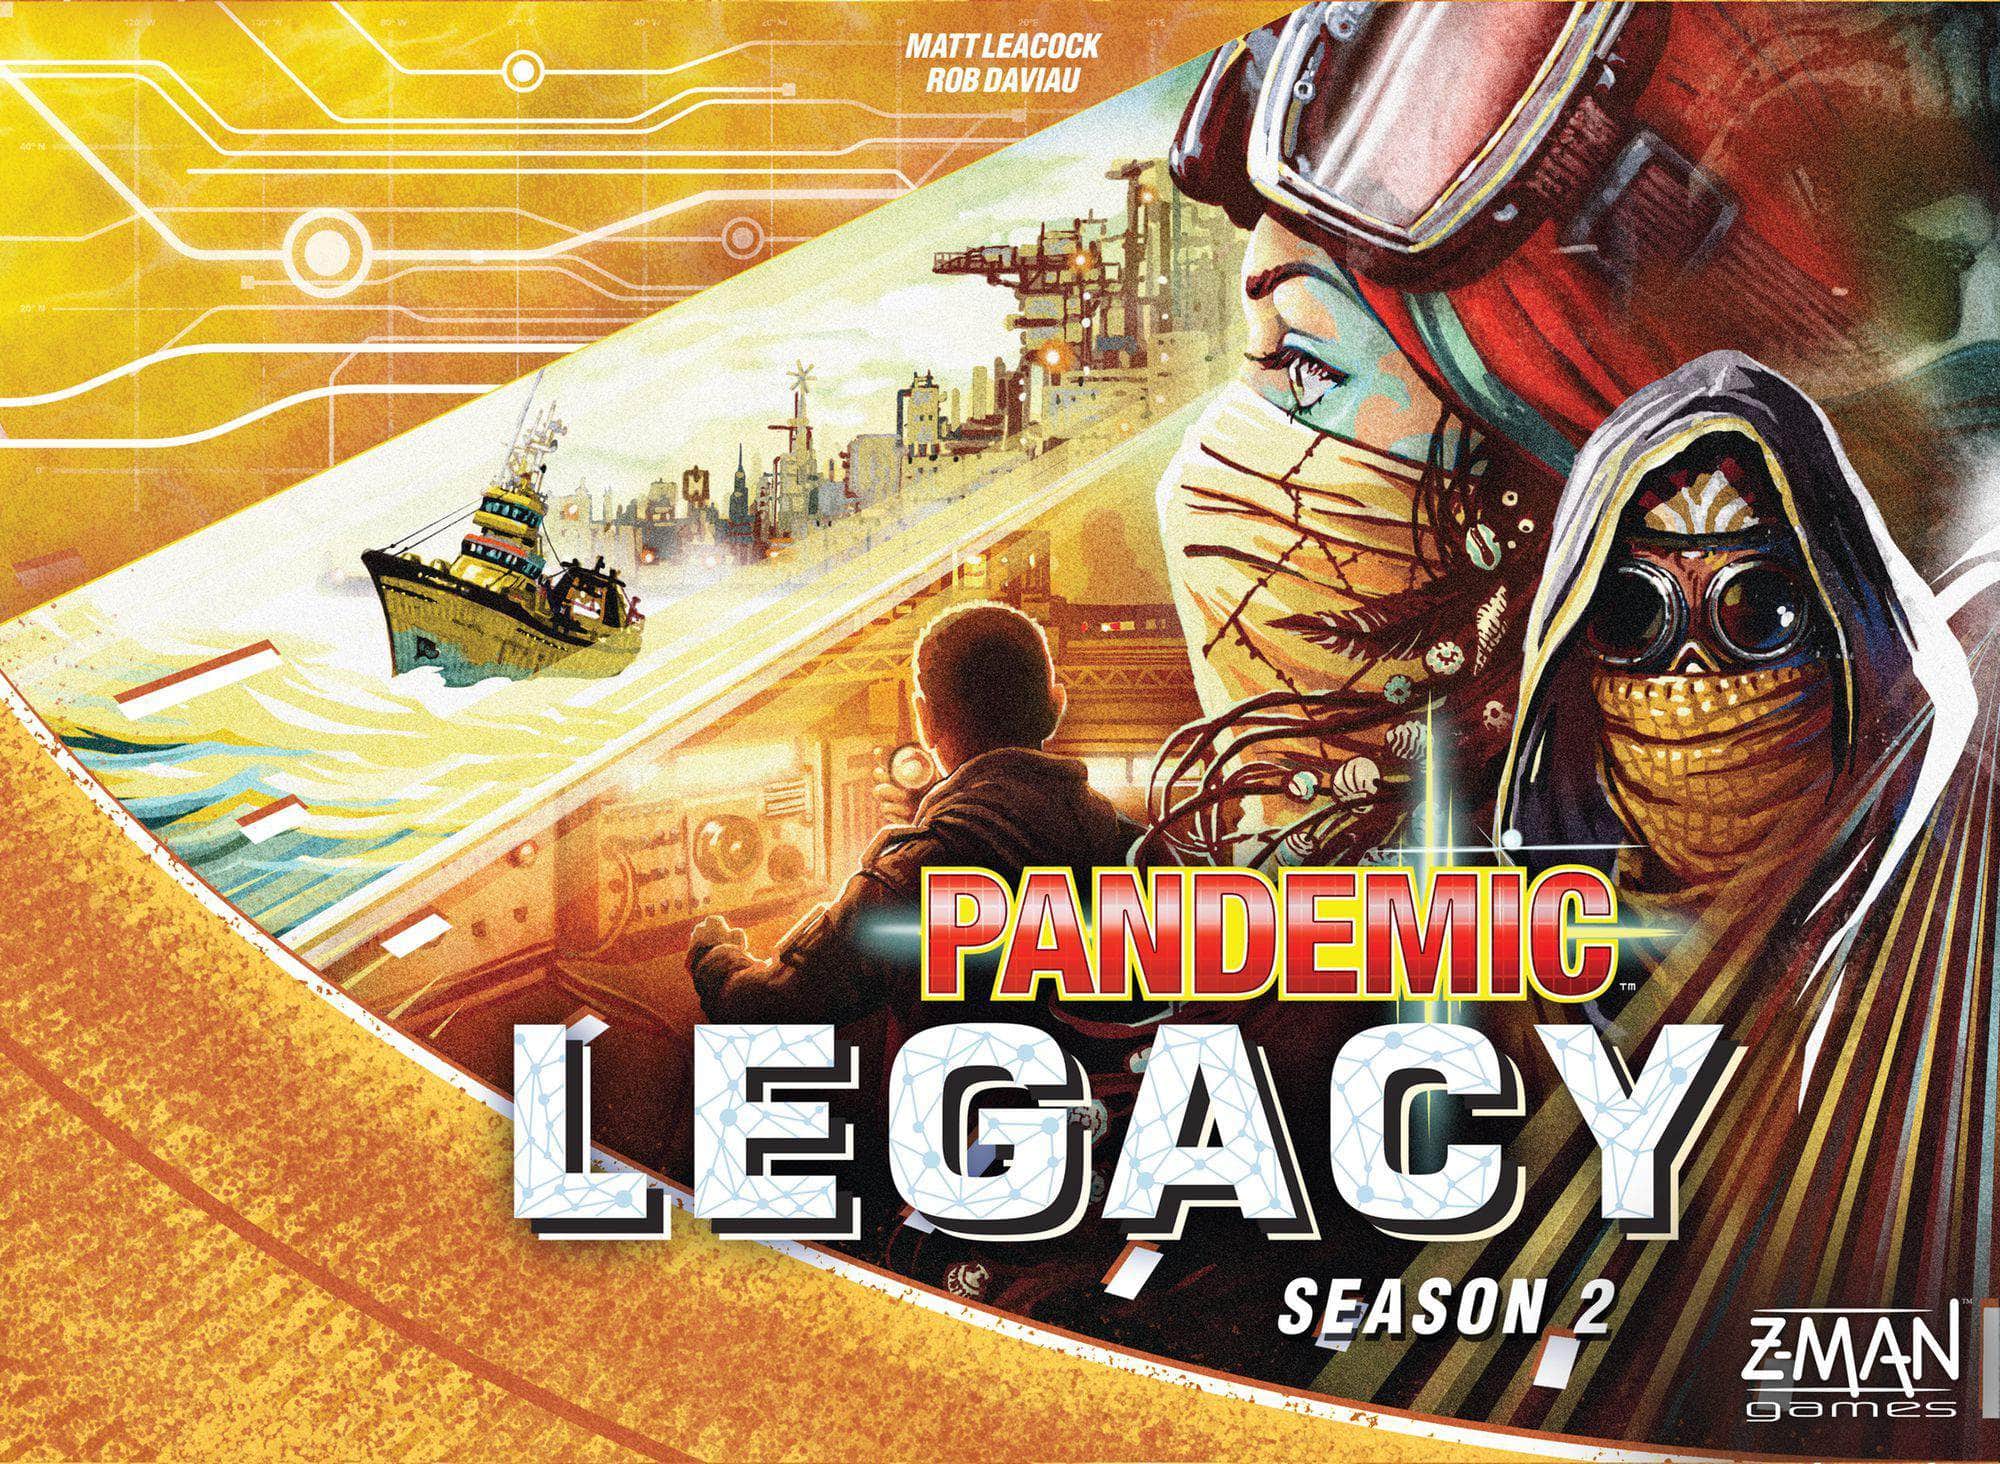 Pandemic Legacy: Staffel 2 Einzelhandelsbrettspiel Z-MAN-Spiele, Asmodee, Devir, Hobby Japan, Korea Boardgames Co., Lacerta, Lifestyle BoardGames KS800537a